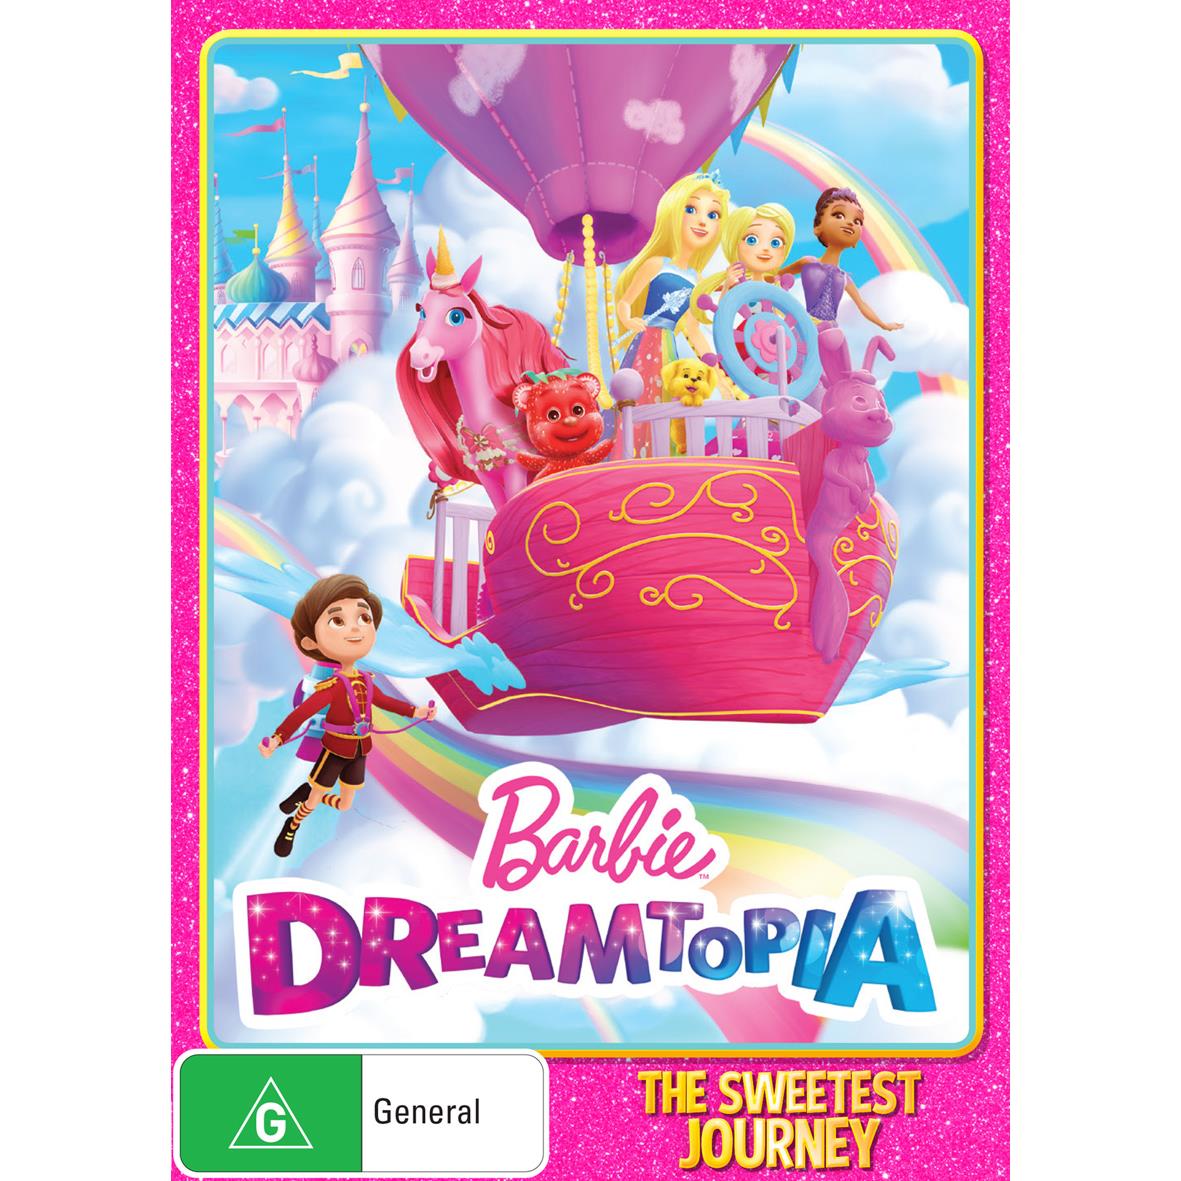 barbie dreamtopia - the sweetest journey